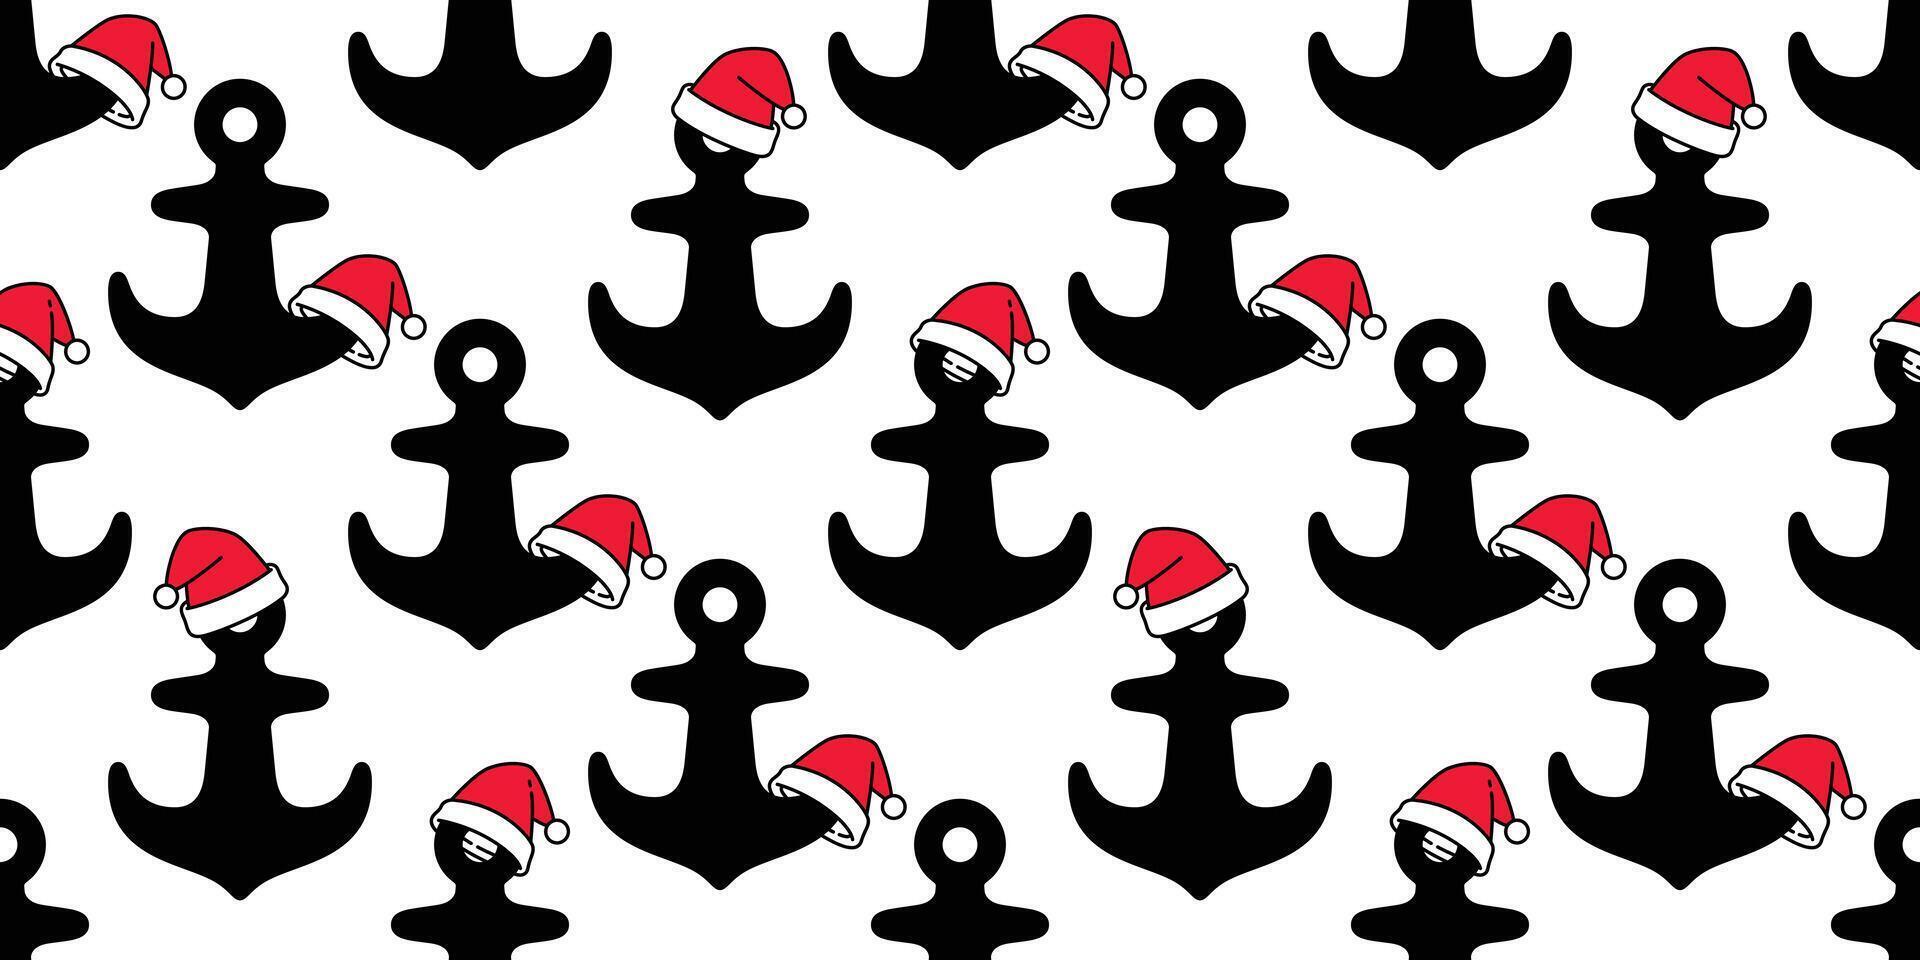 ancla vector Navidad Papa Noel claus sombrero icono logo timón barco símbolo pirata náutico marítimo dibujos animados sencillo ilustración garabatear gráfico diseño